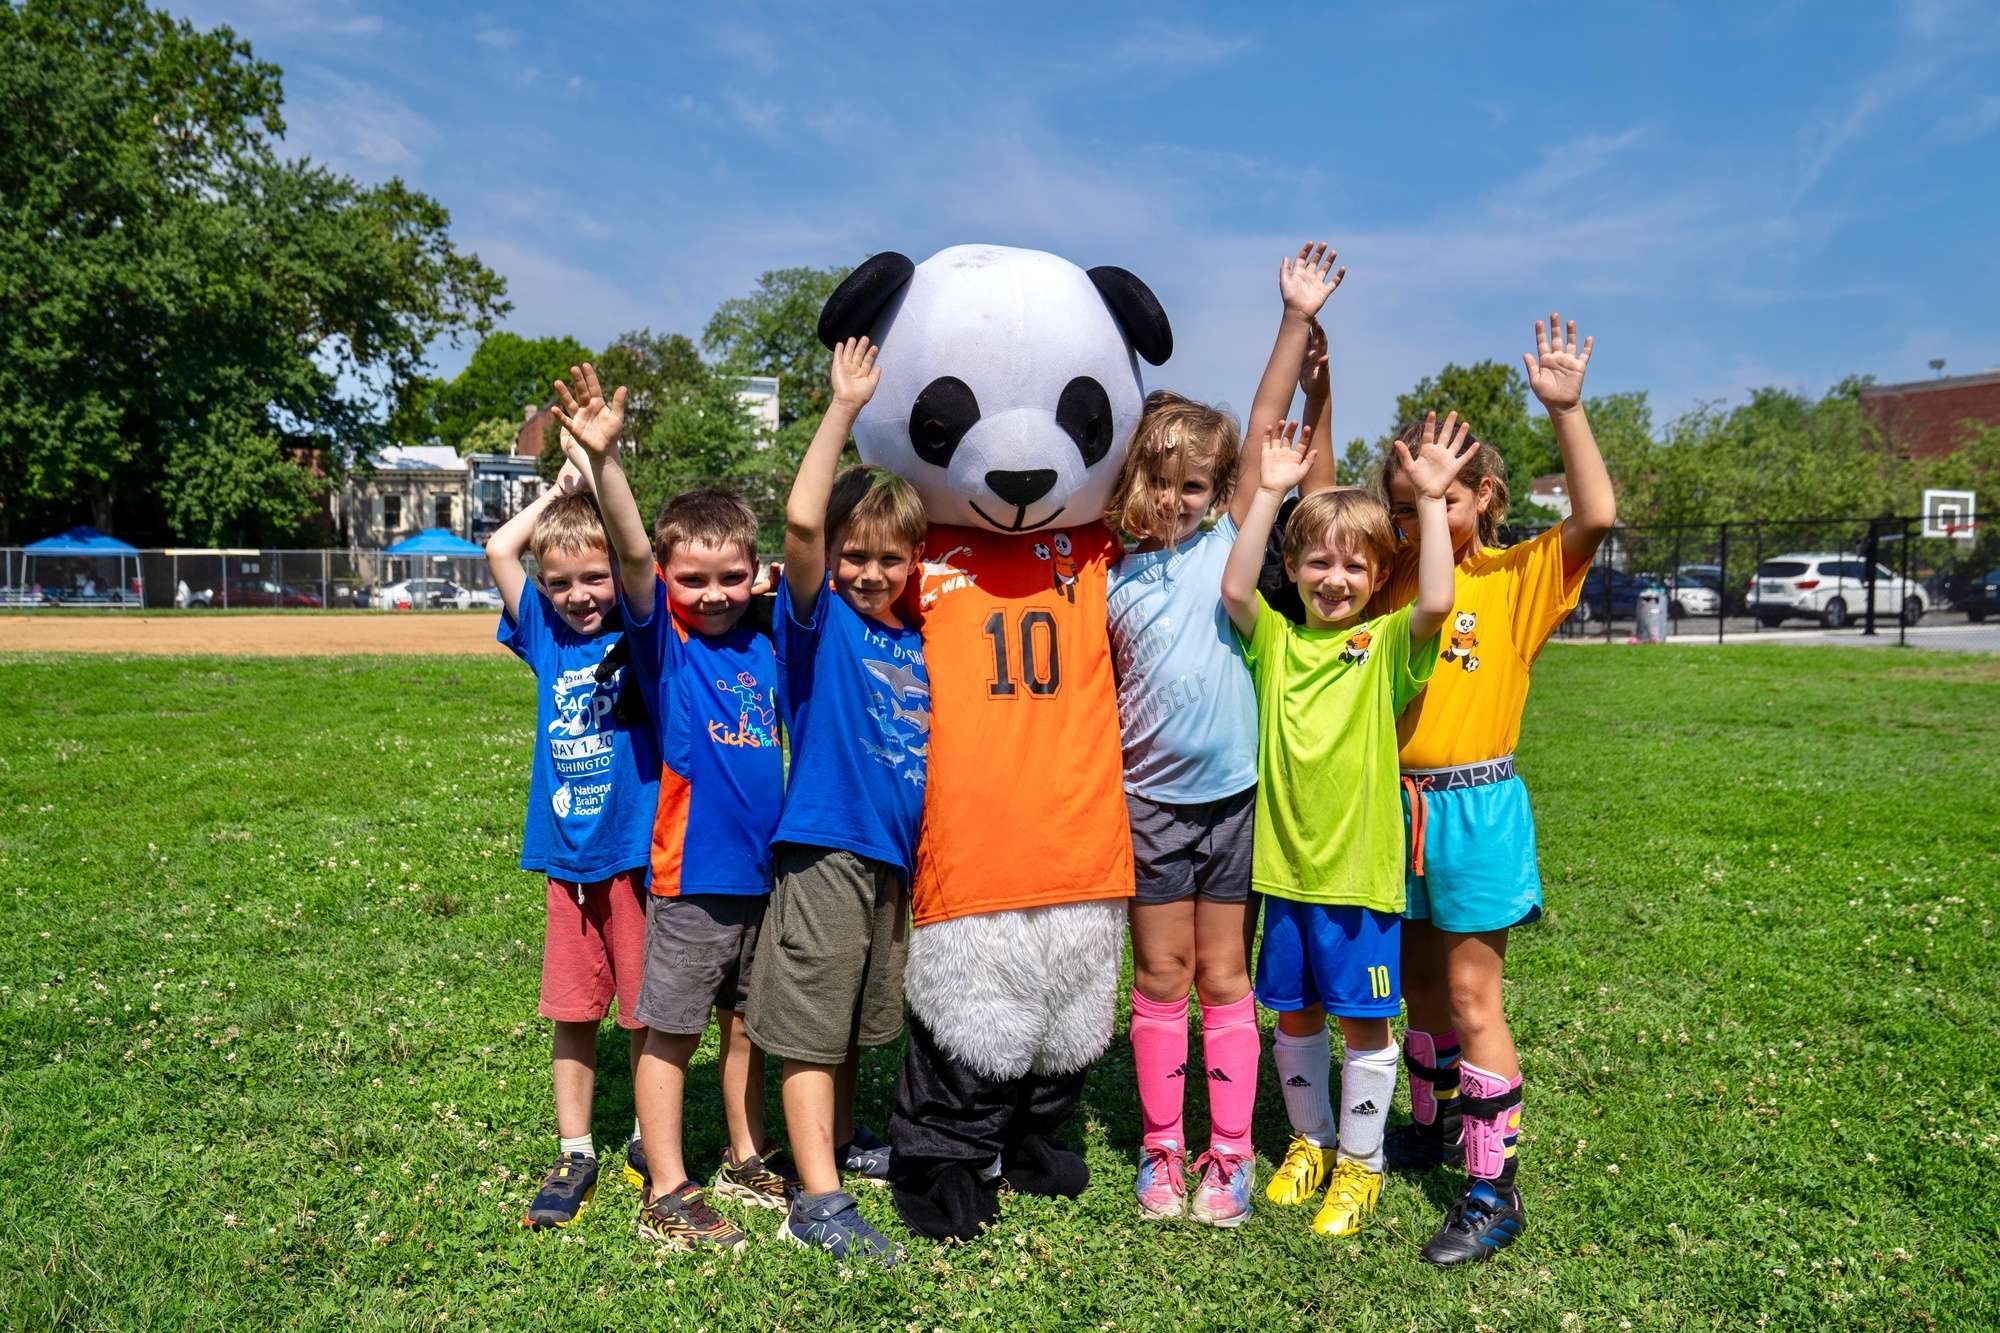 Dc-way-soccer-club-for-kids-in-washington-dc-summer-camp-at-tyler-elementary-school- 0216.jpg